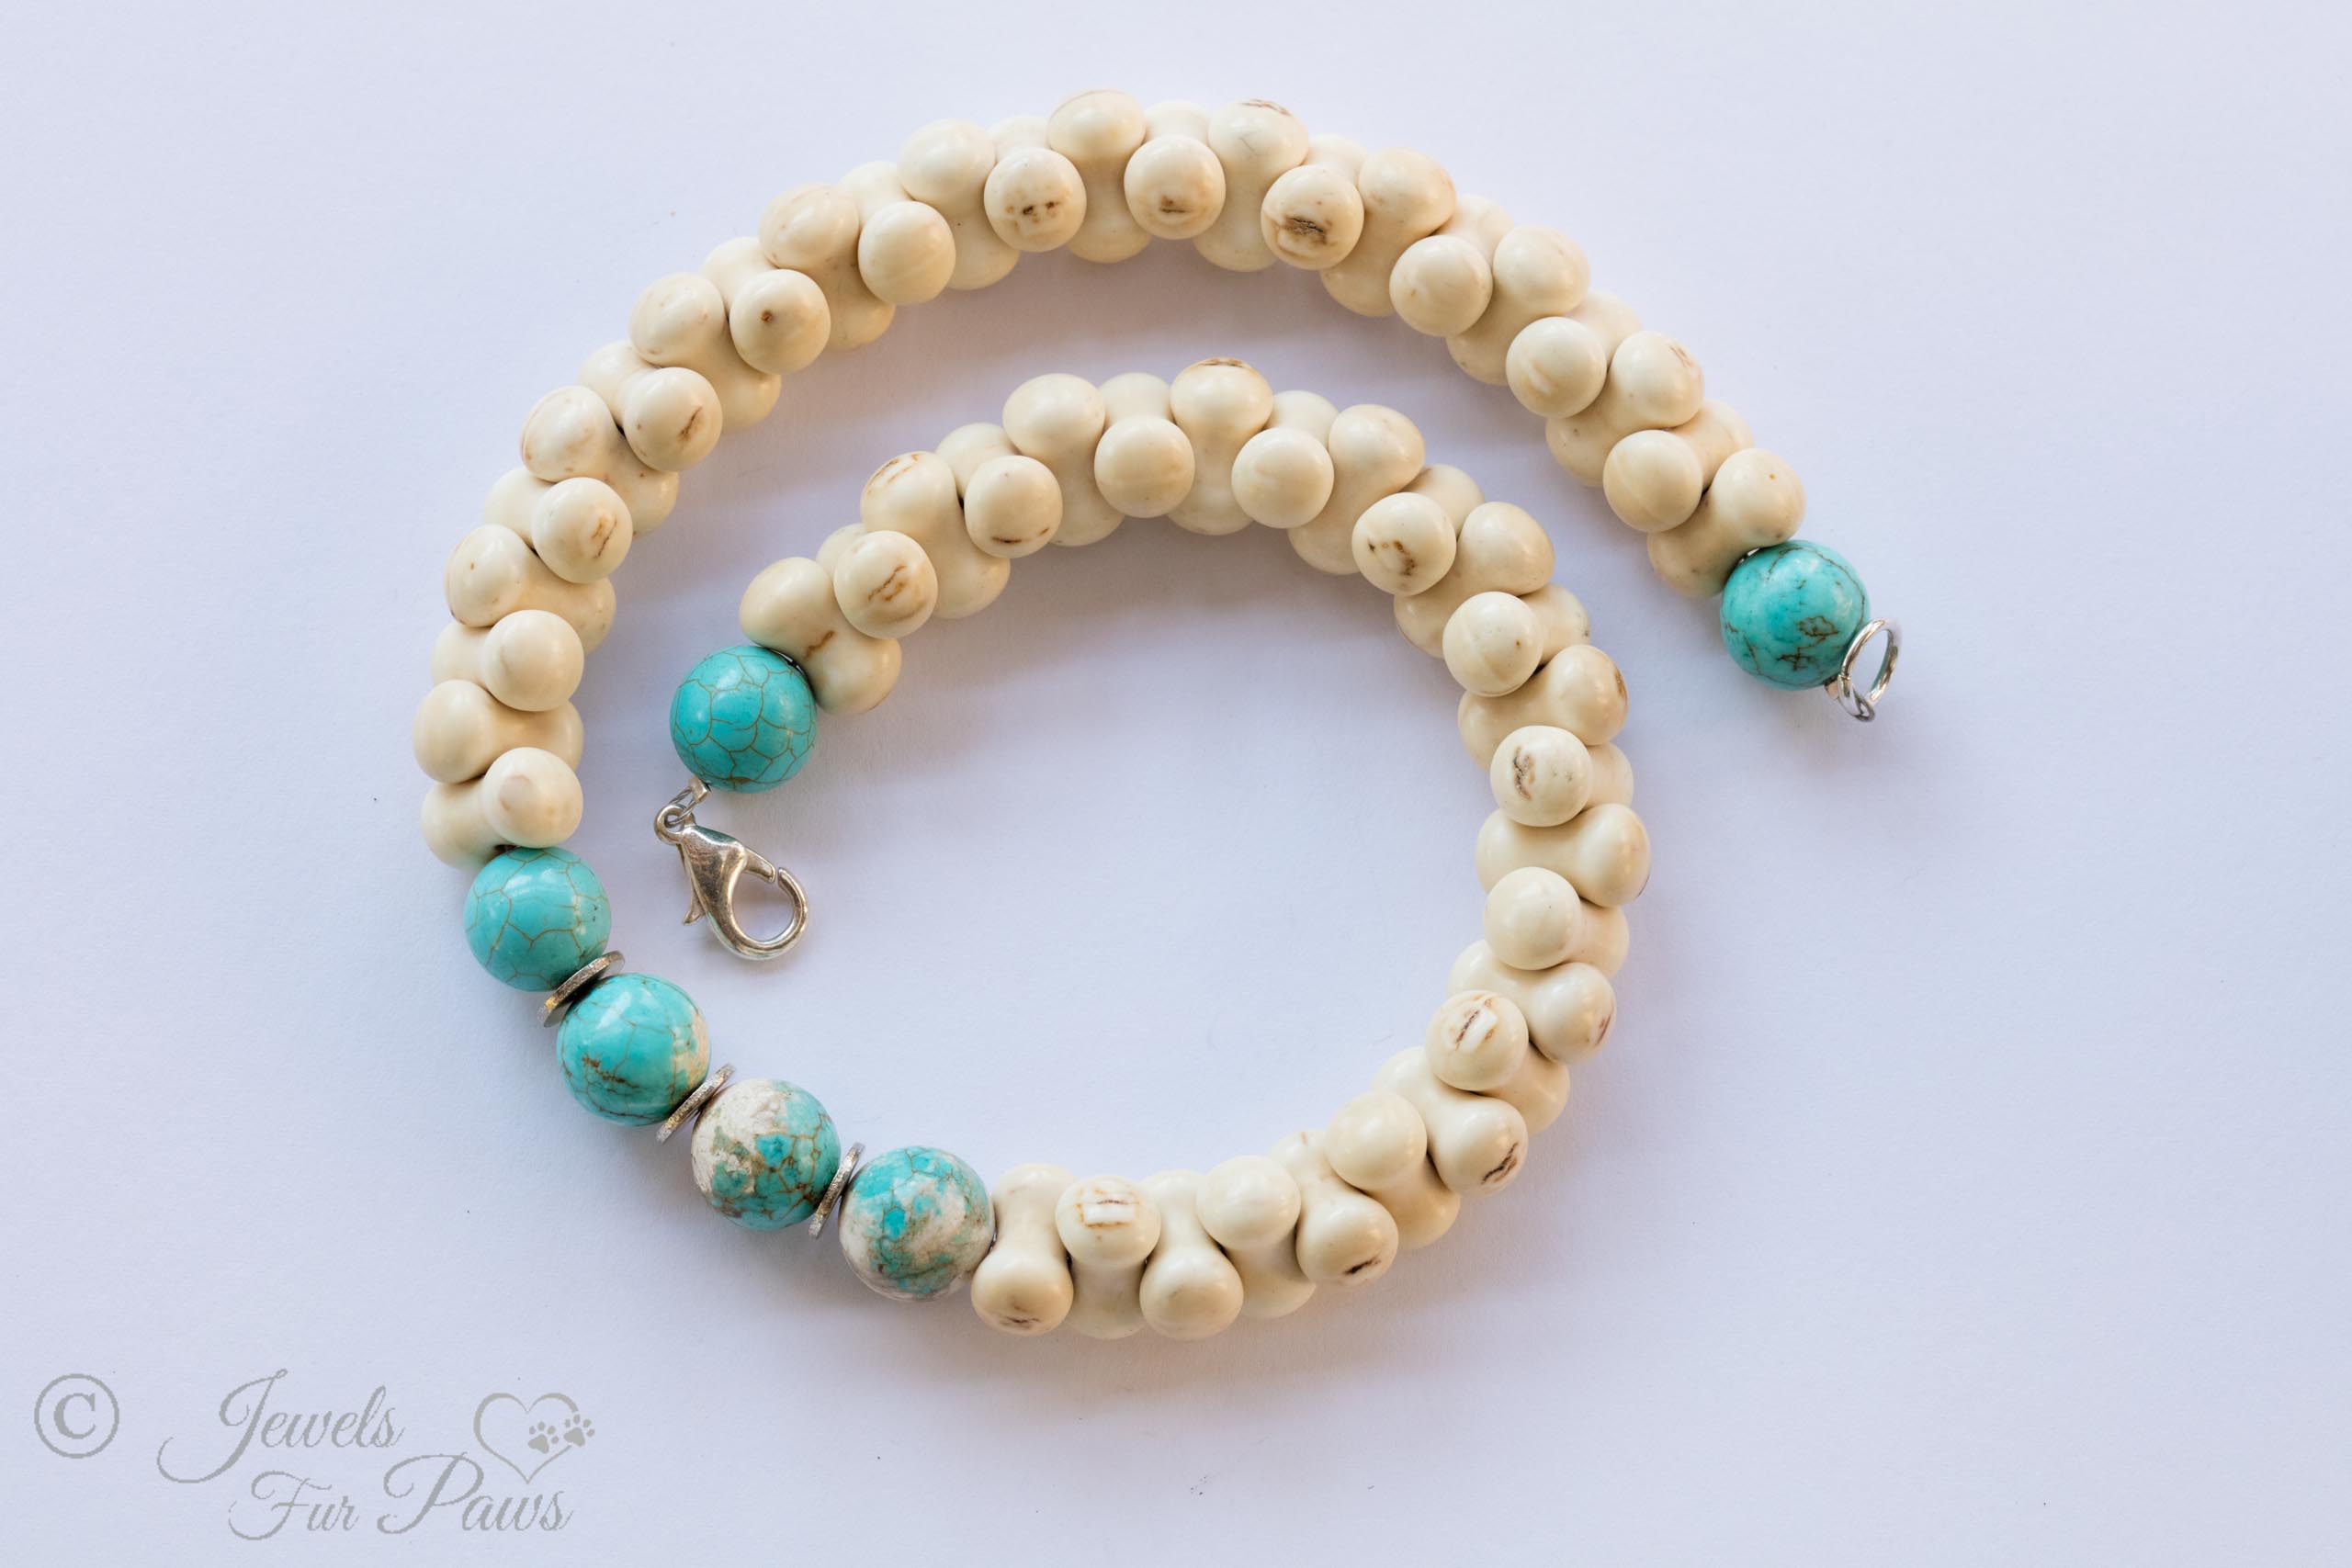 interlocking bone shaped beads surround four turquoise beads with turquoise end beads on white background